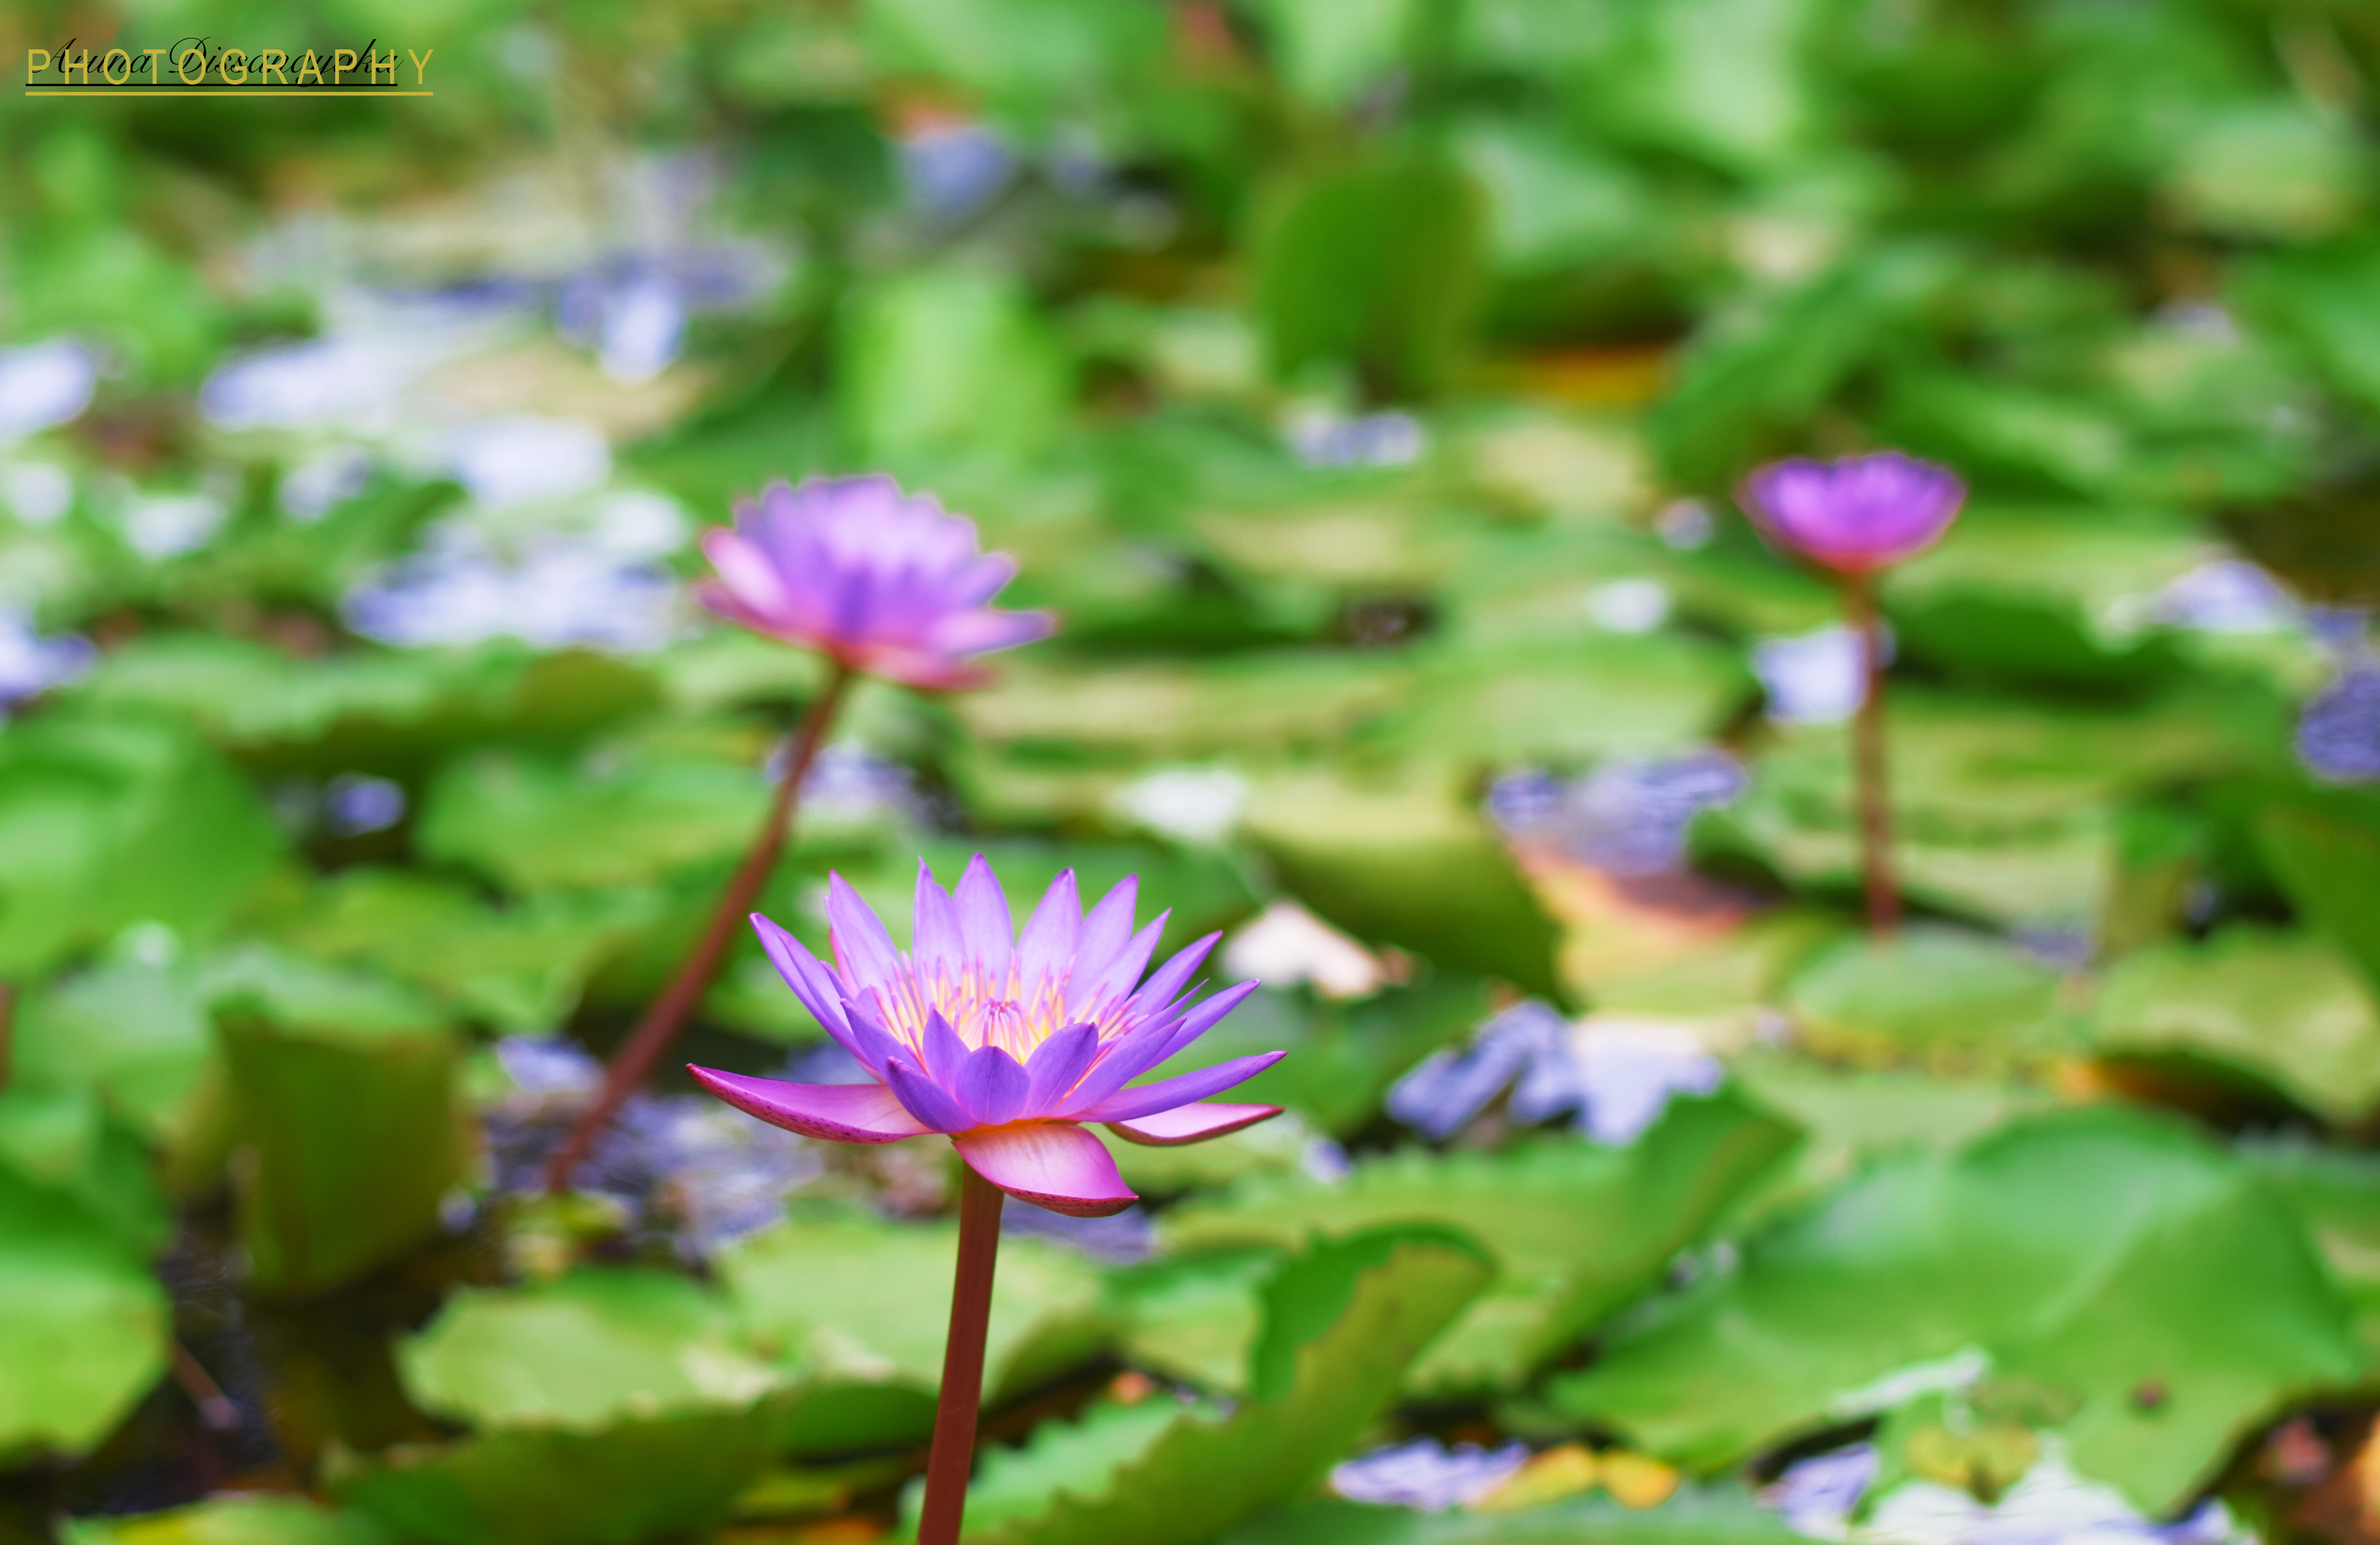 pic of blue lotus flower